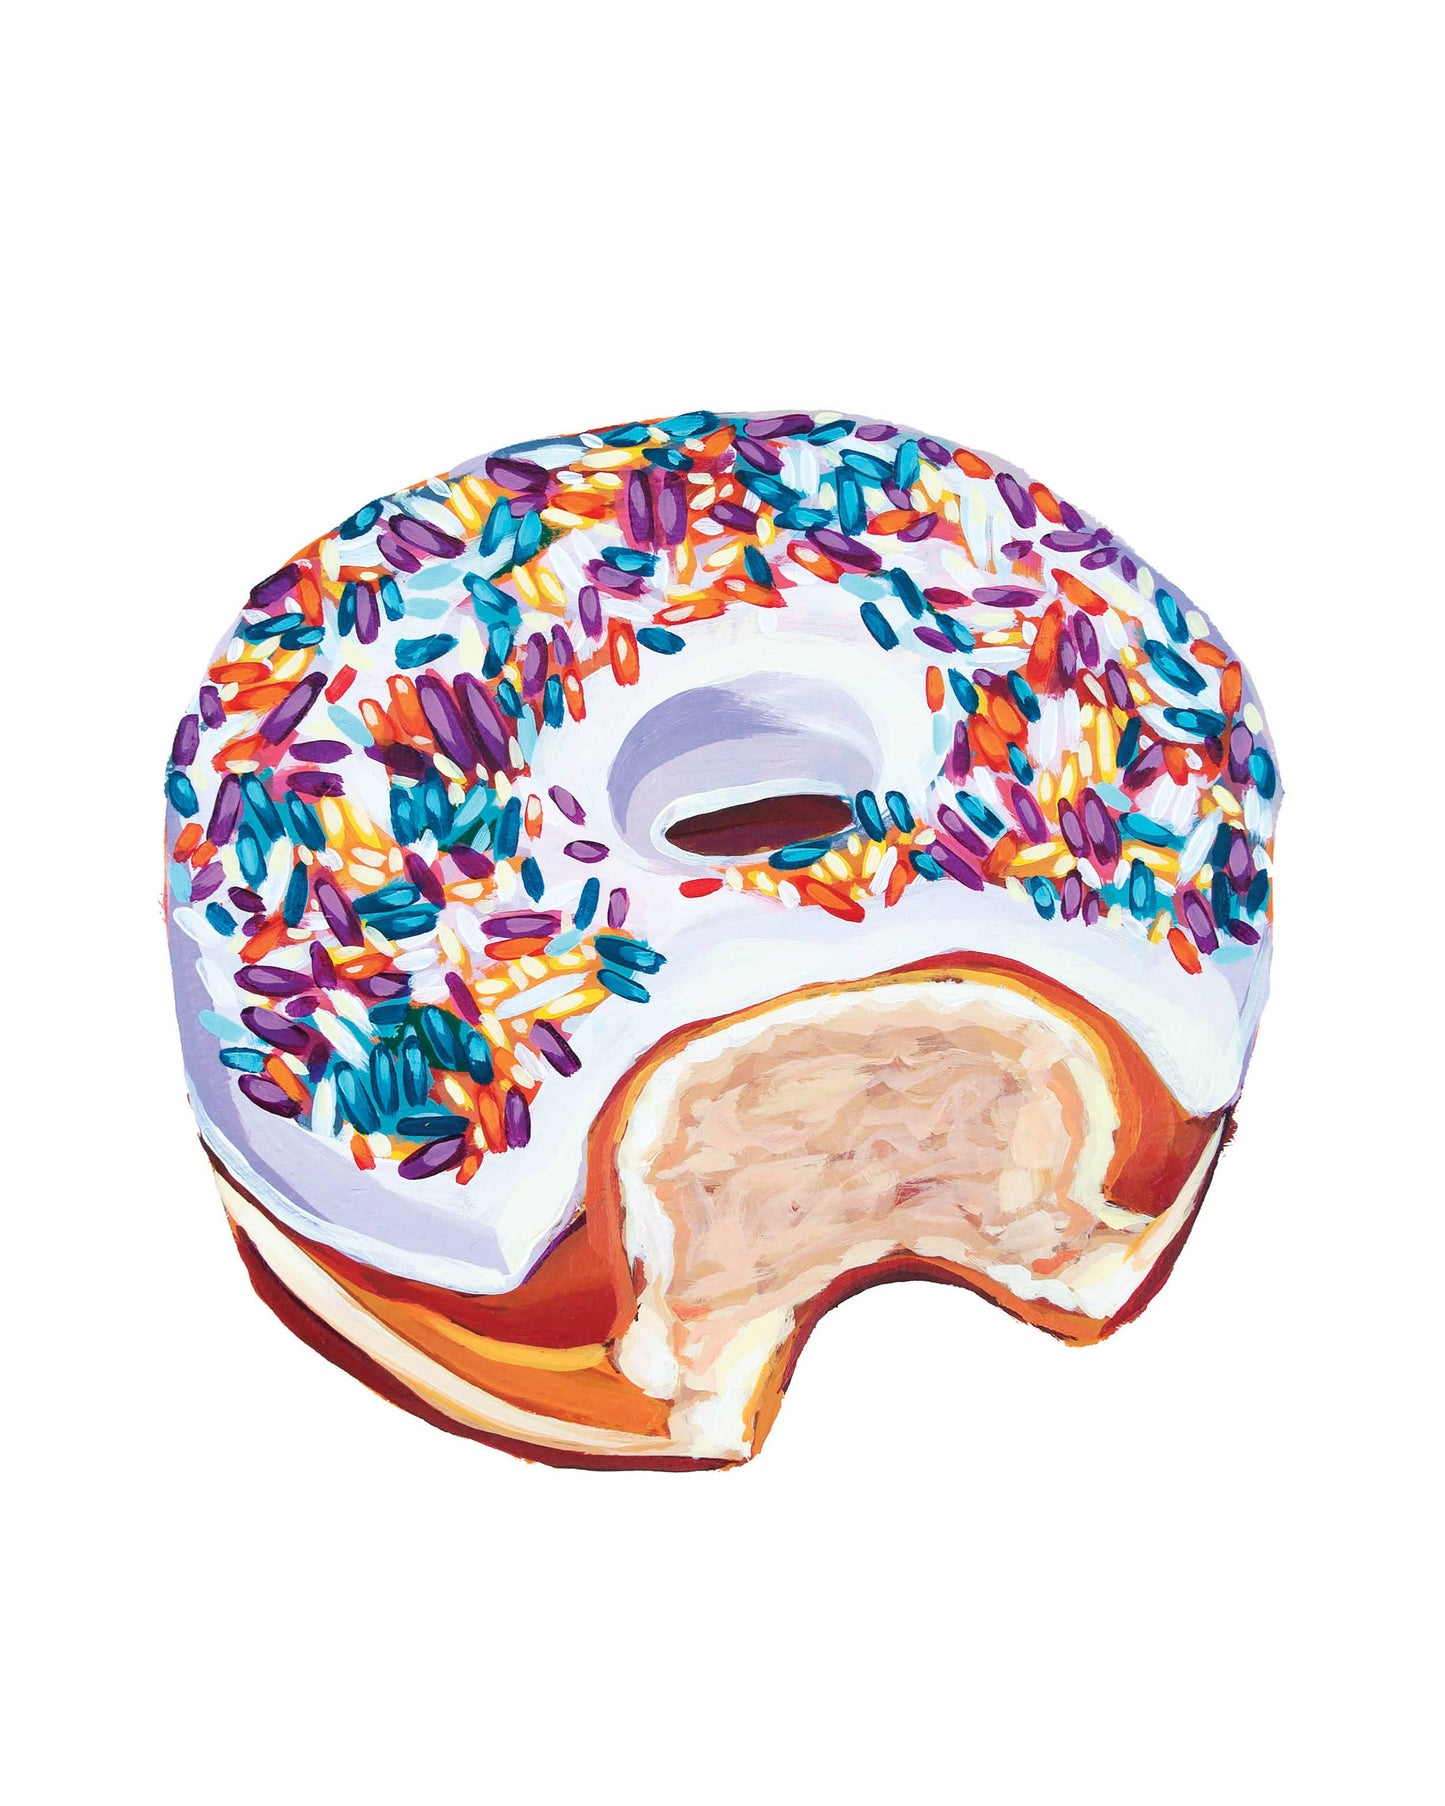 Laurel Greenfield's Donut Bite Print - 8” x 10”